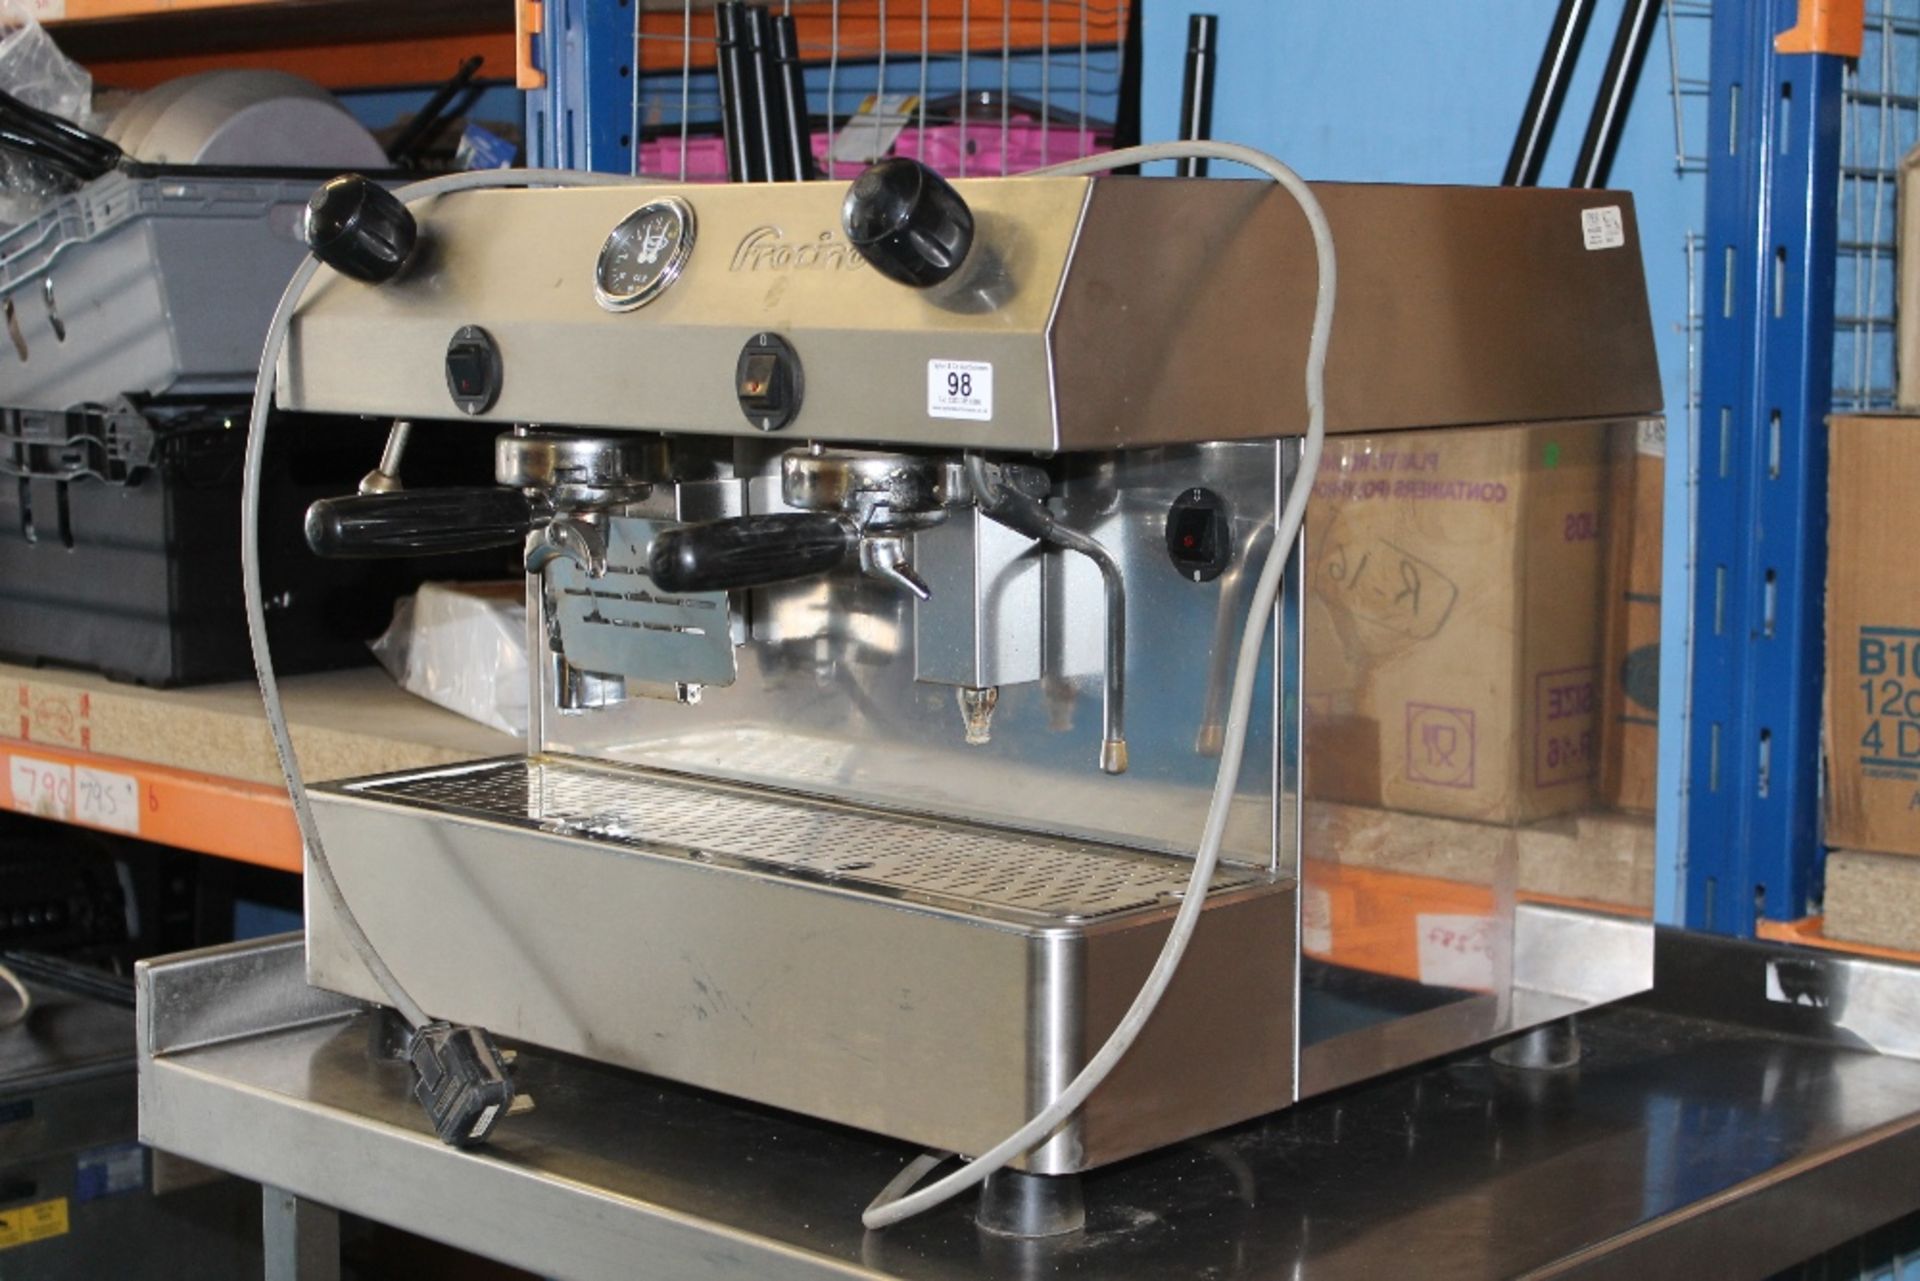 Fracino 2 Group Espresso Coffee Machine – Tested – NO VAT